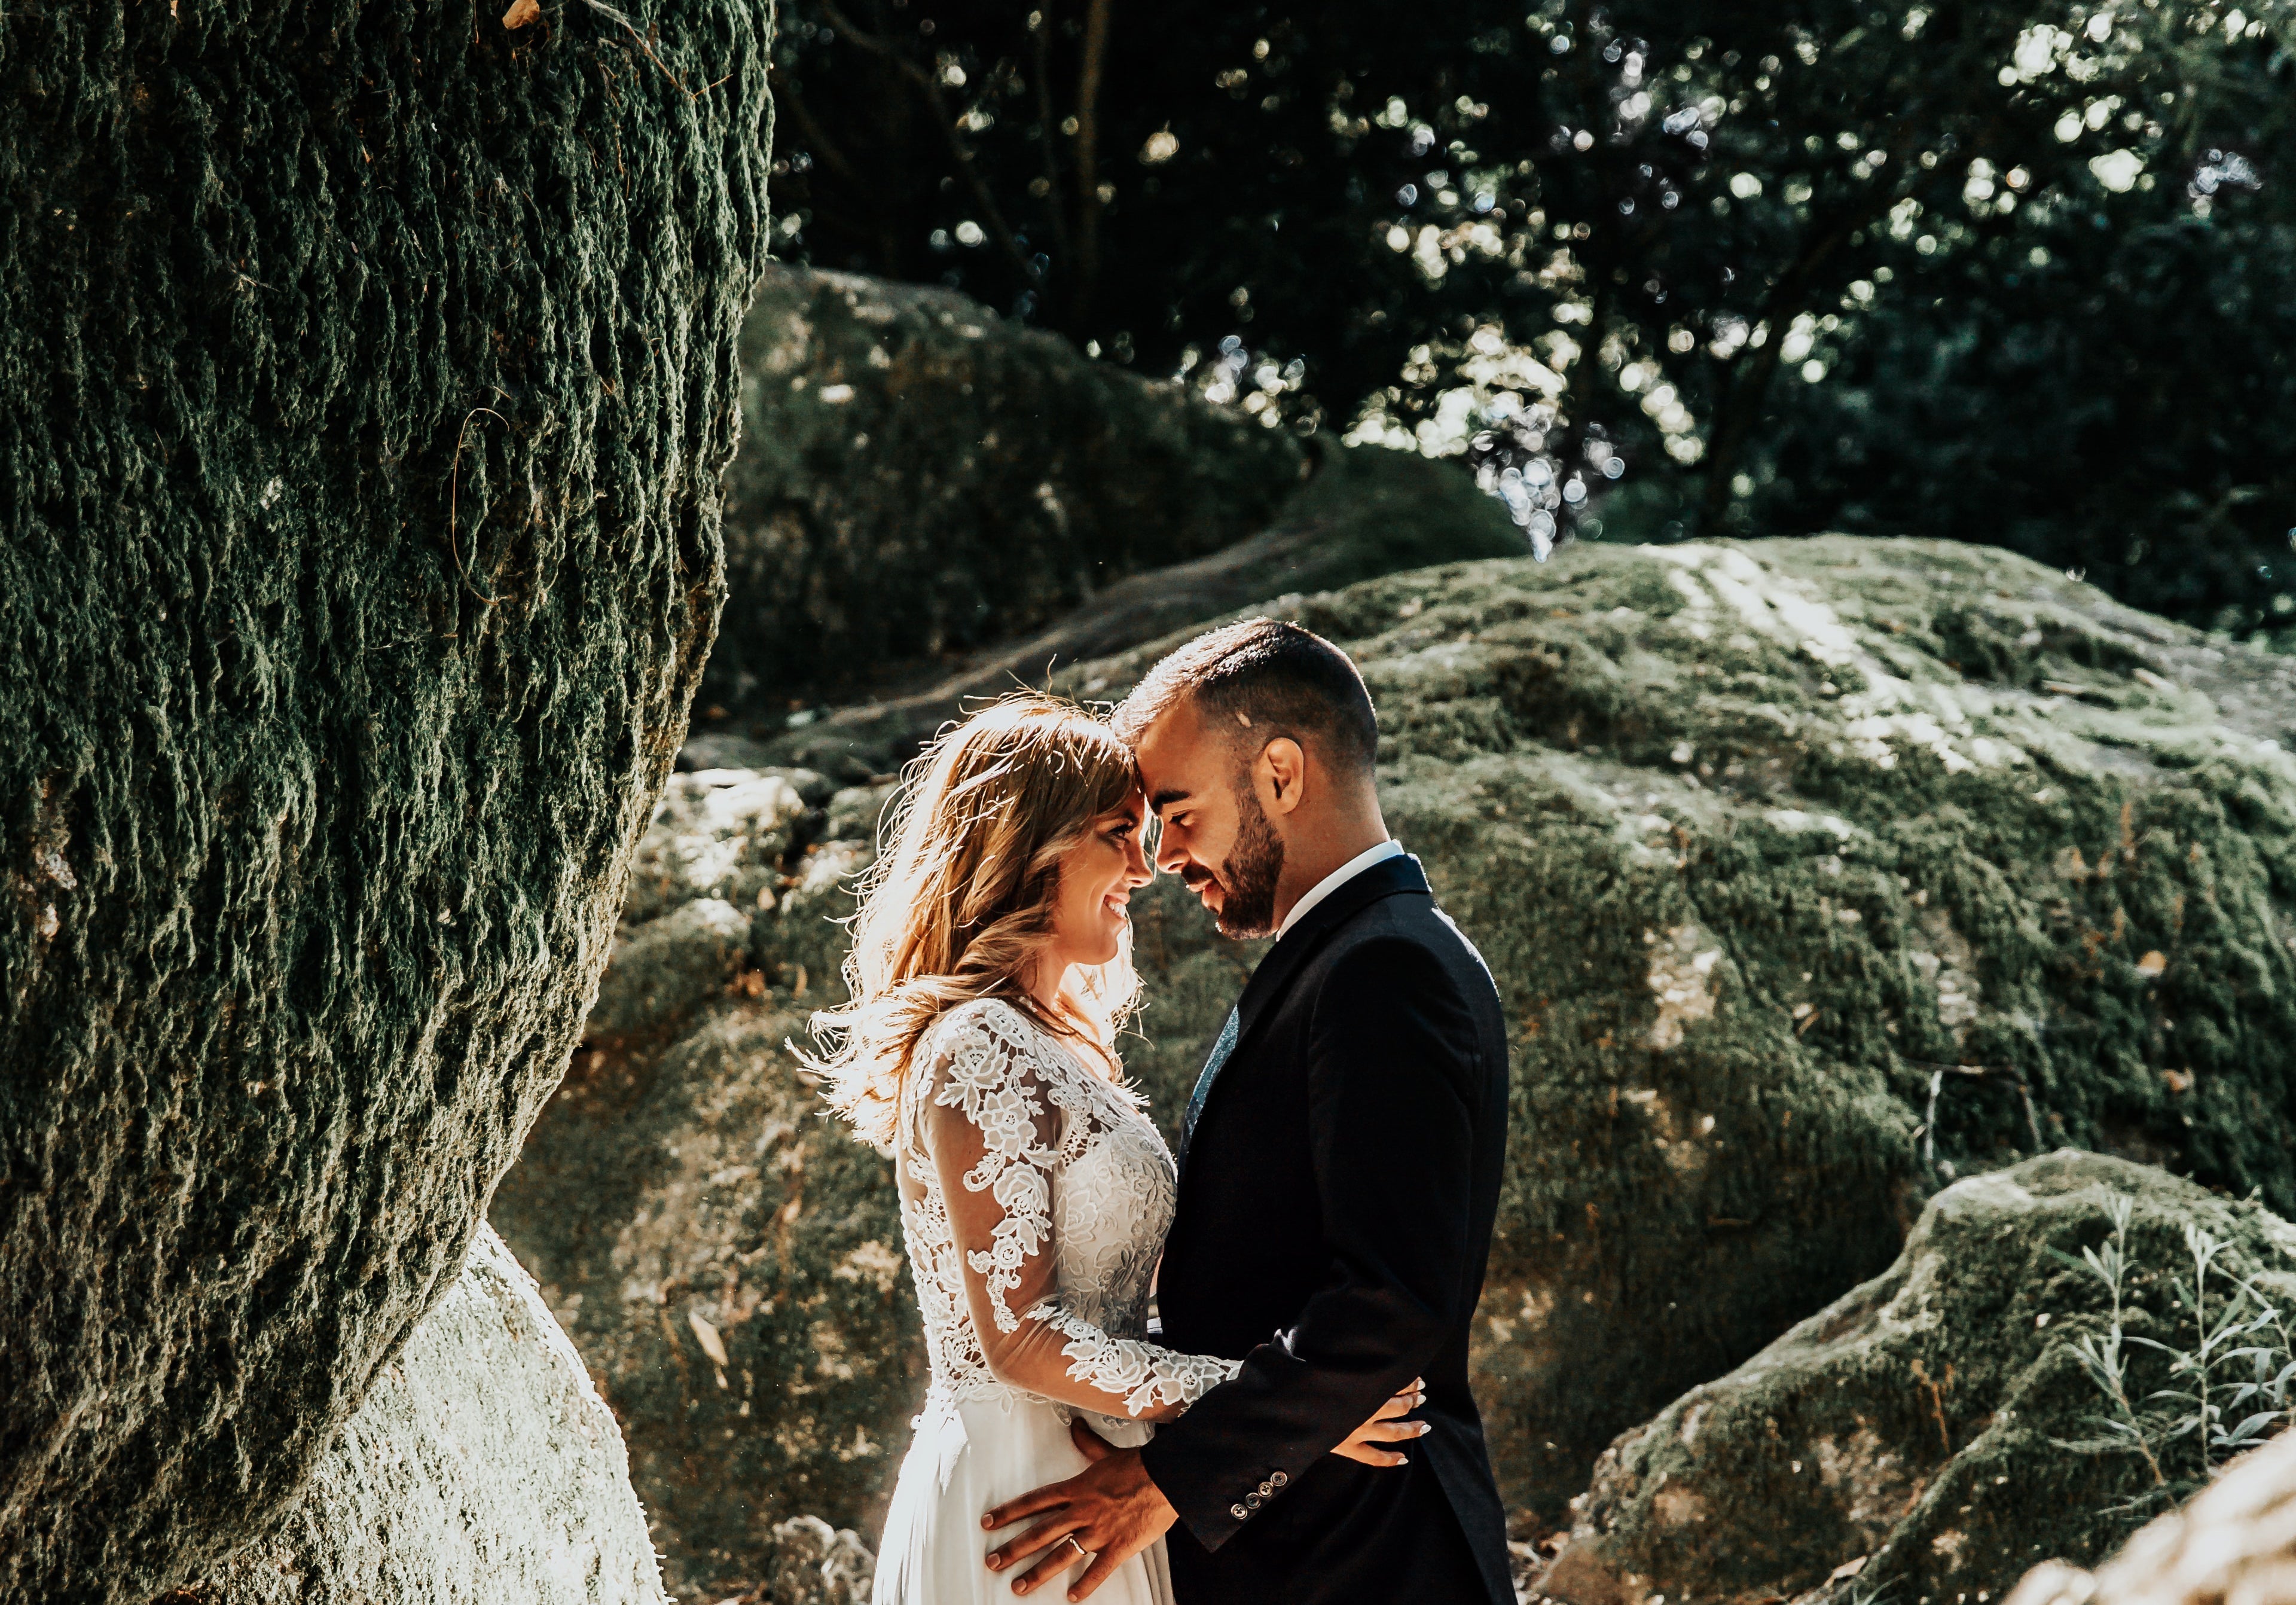 20 Amazing and Elegant Outdoor Wedding Photography Ideas.